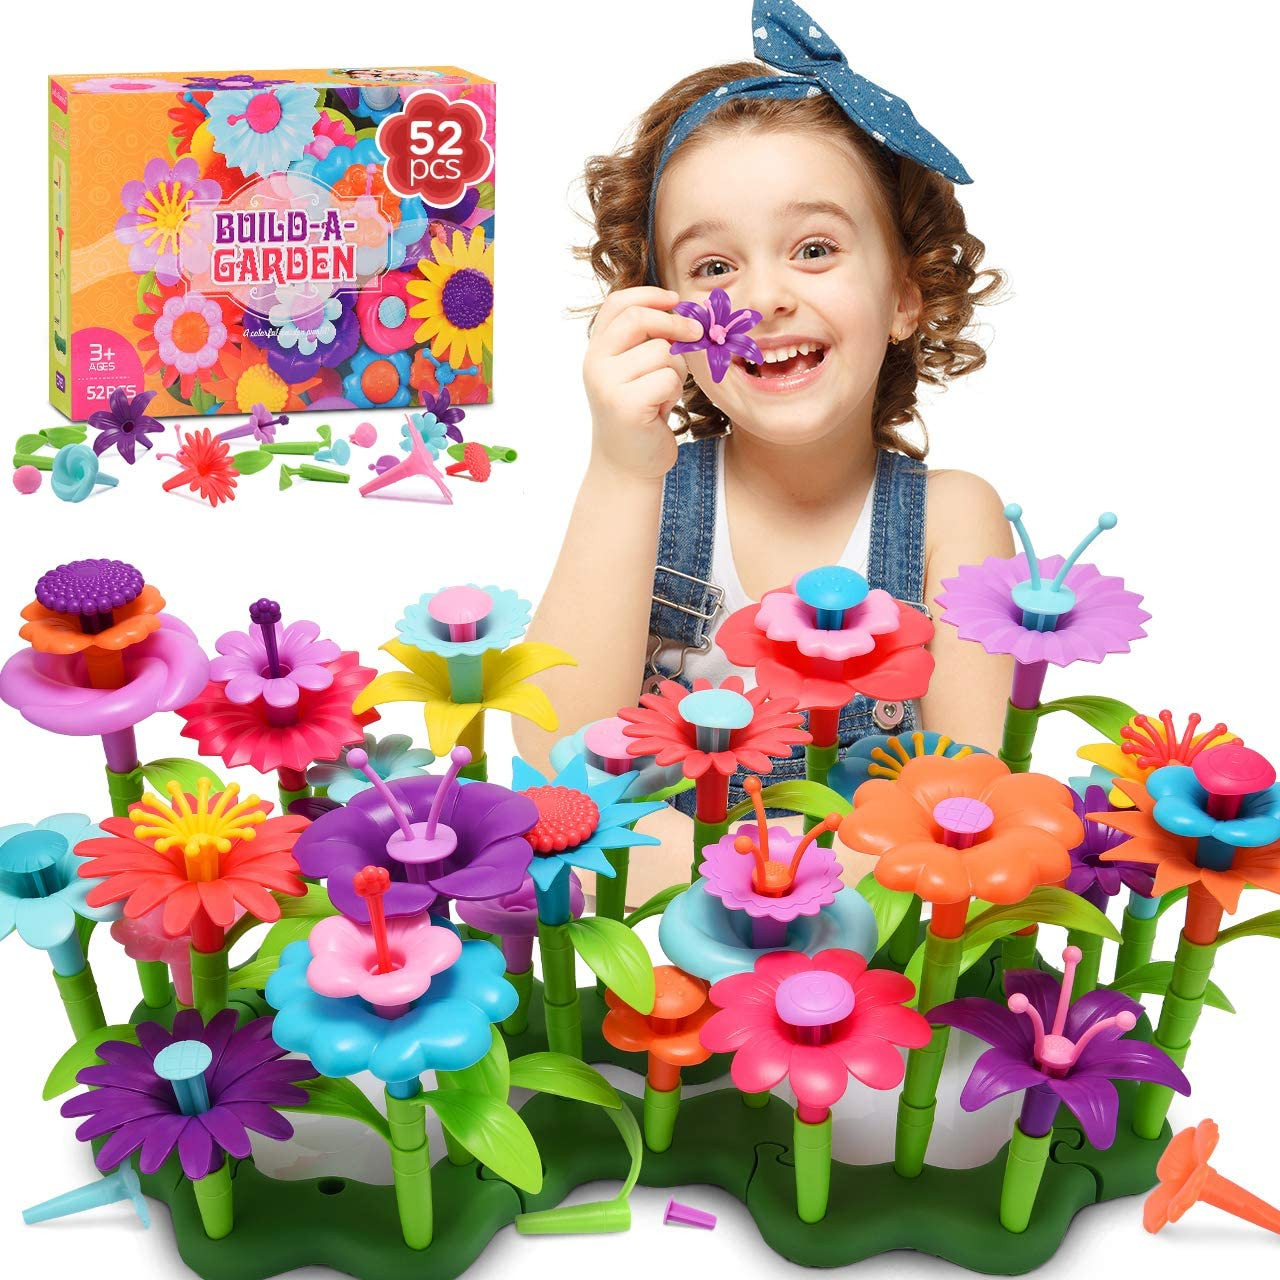 Gift Ideas For Girls Age 5
 Snoky Toys for 3 12 Year Old Girls Flower Garden Building